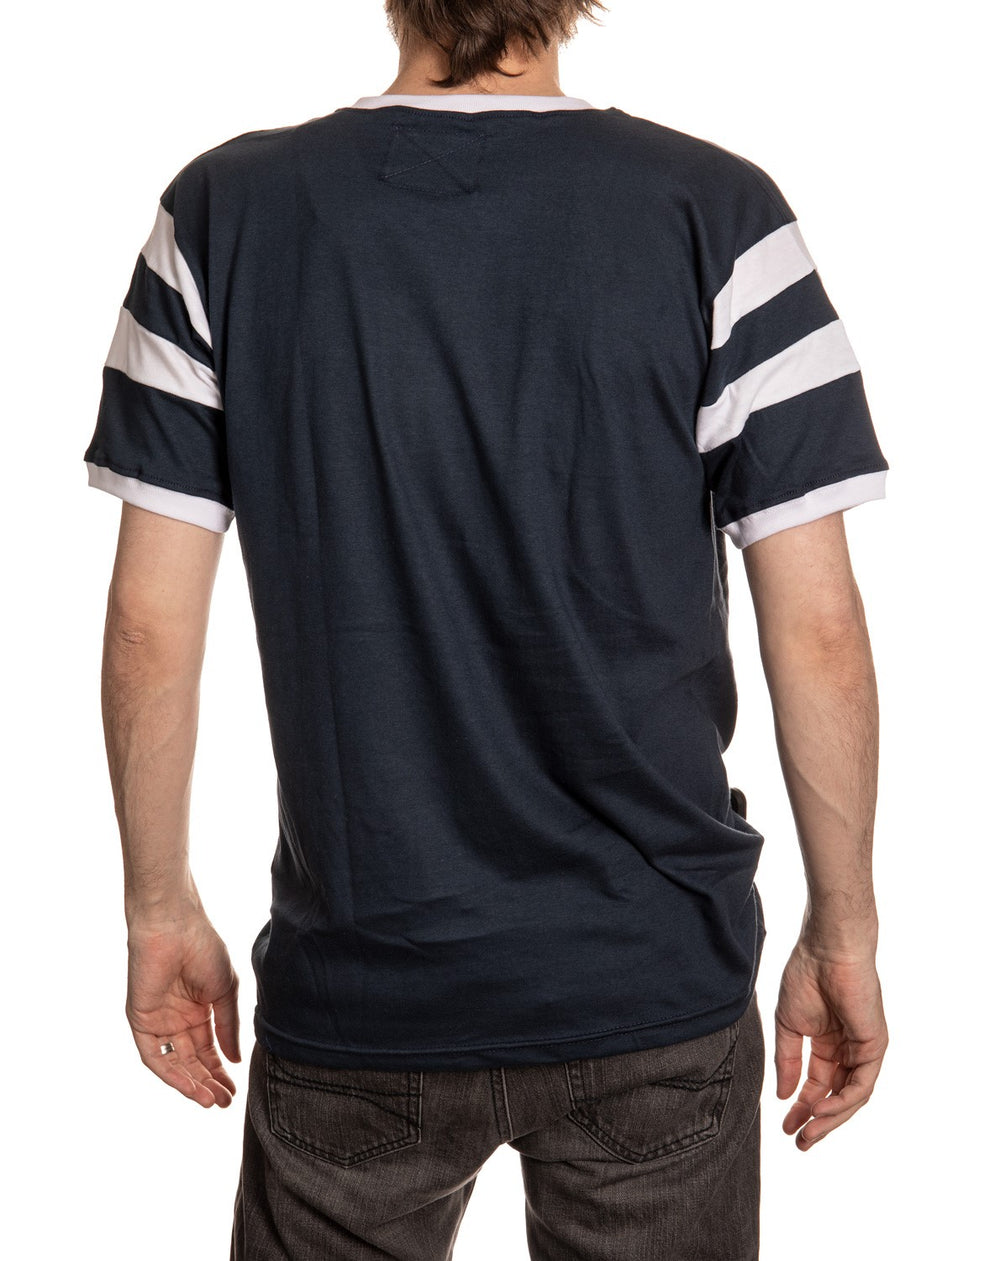 Tampa Bay Lightning Varsity T-Shirt Back View. Blue and White Design